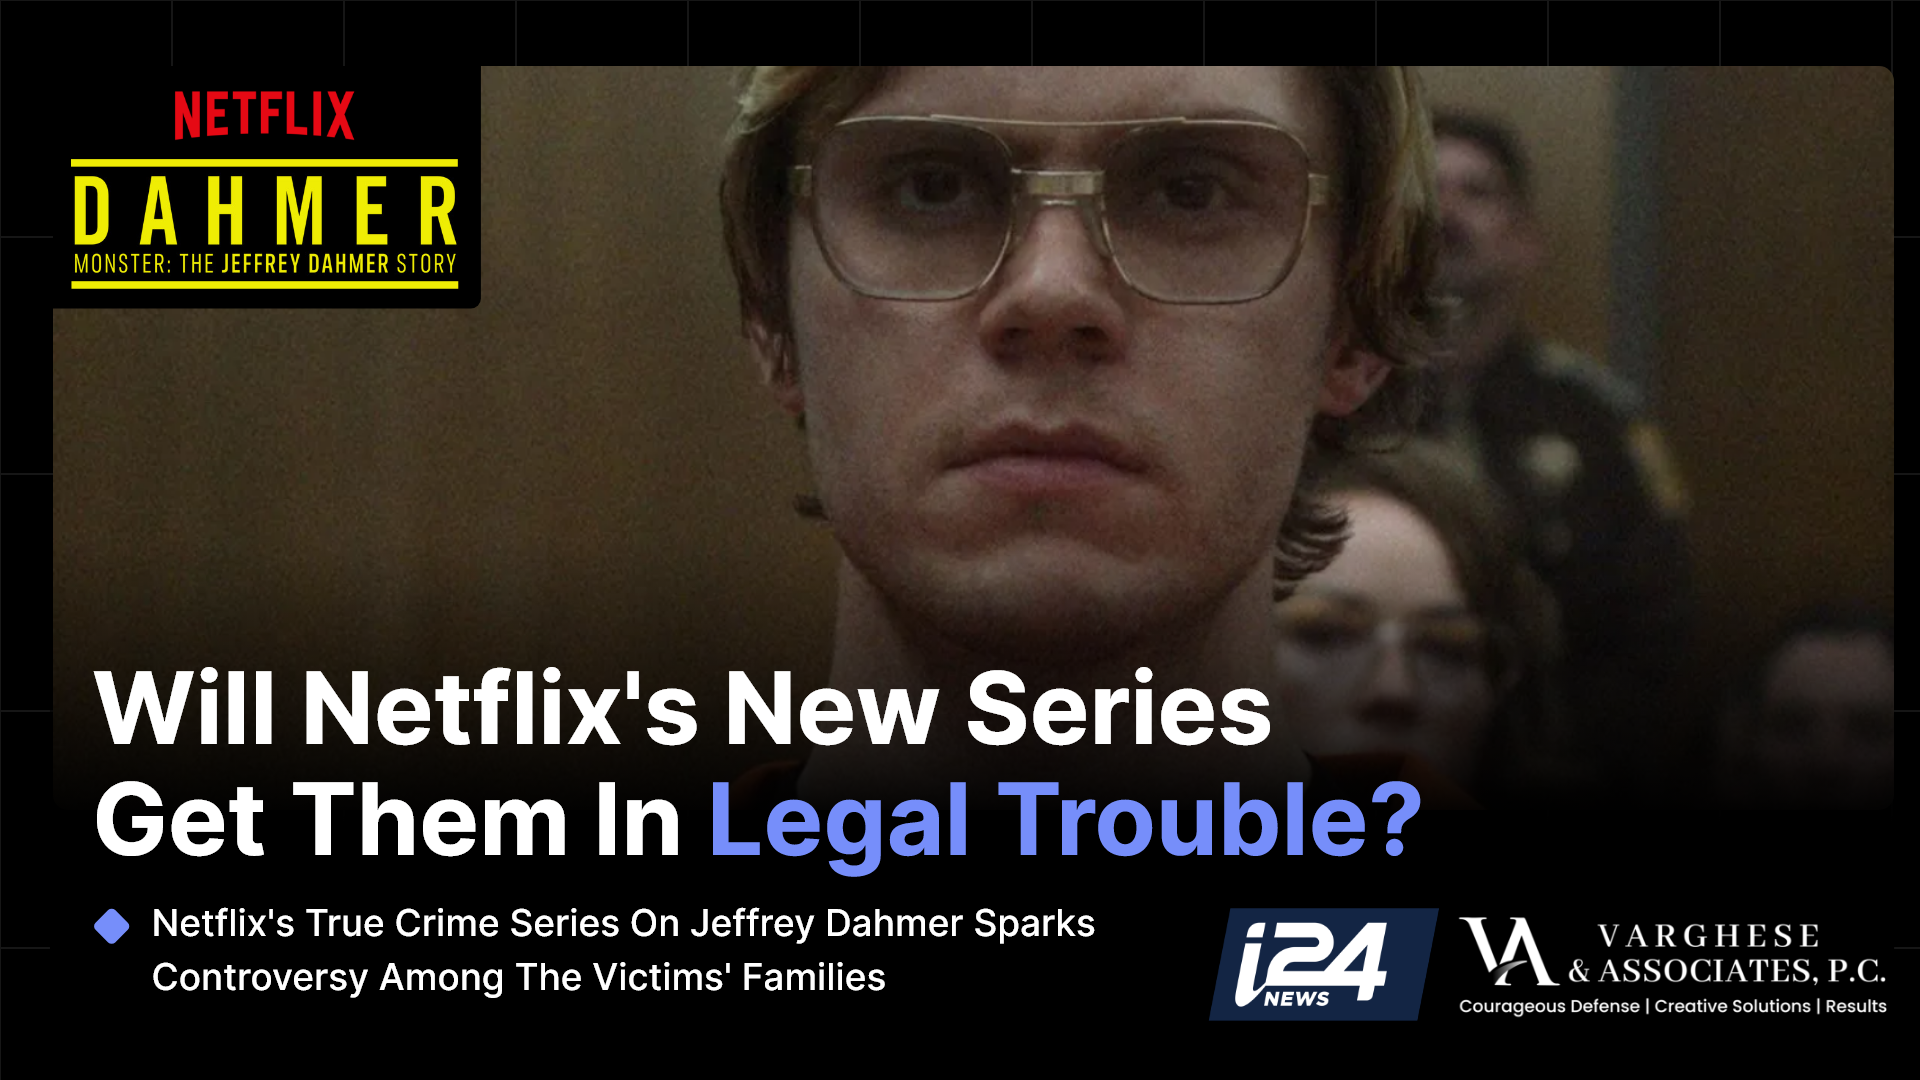 Vinoo Varghese on i24 Israeli News covering Netflix's controversial Jeffrey Dahmer series